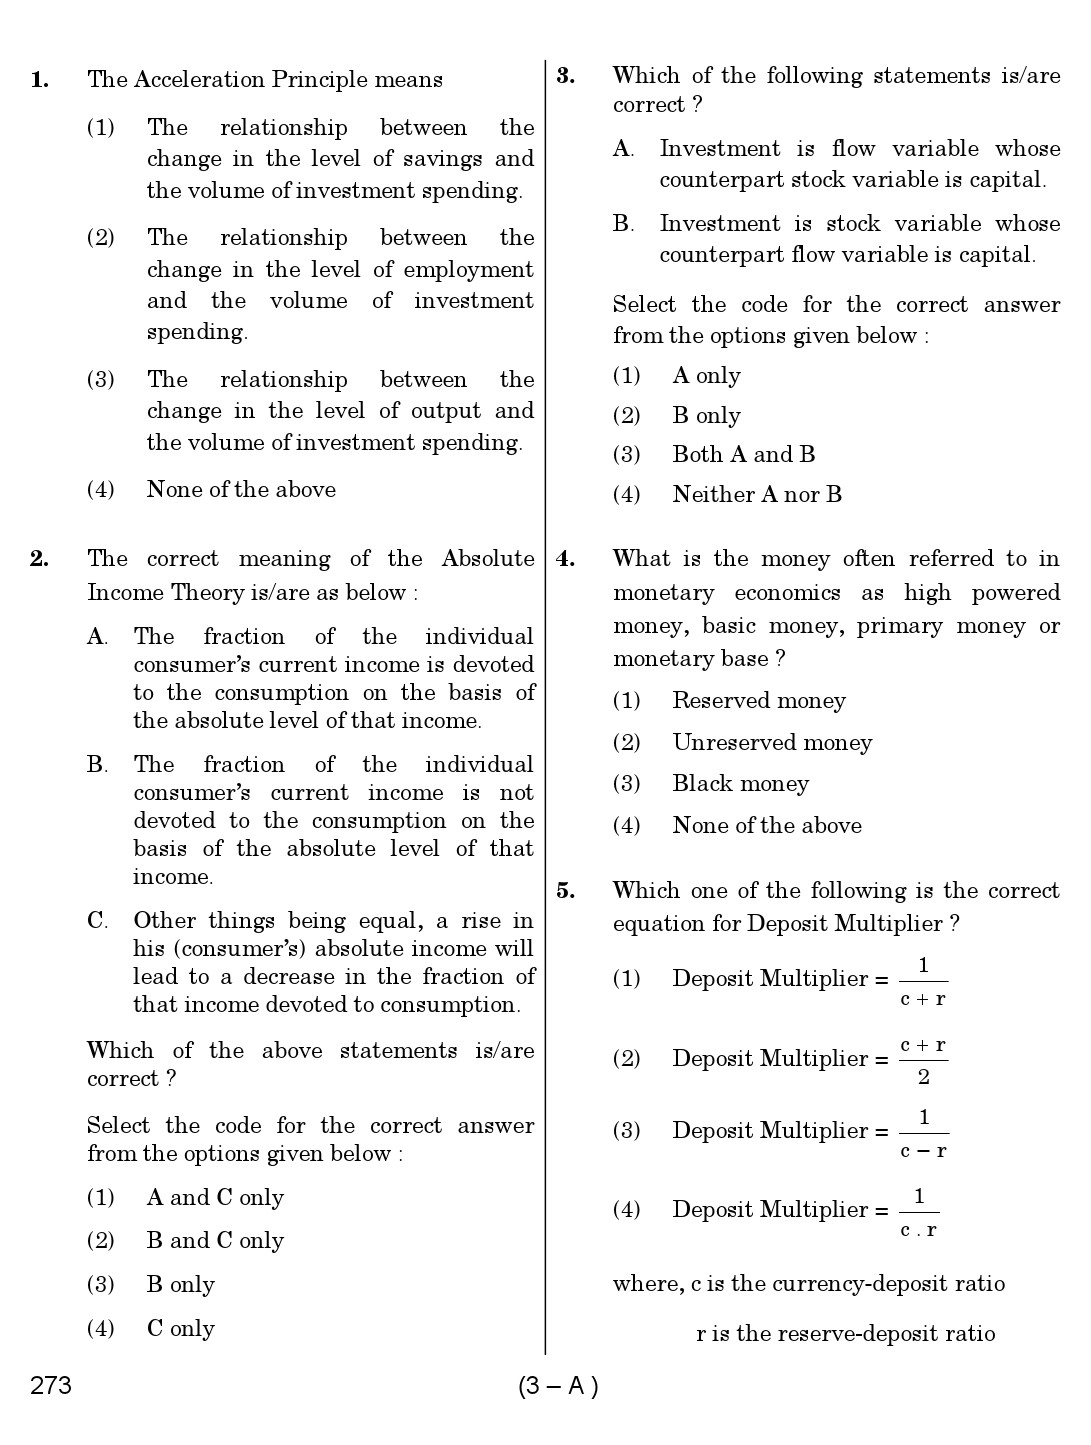 Karnataka PSC Social Science Teacher Exam Sample Question Paper Subject code 273 3